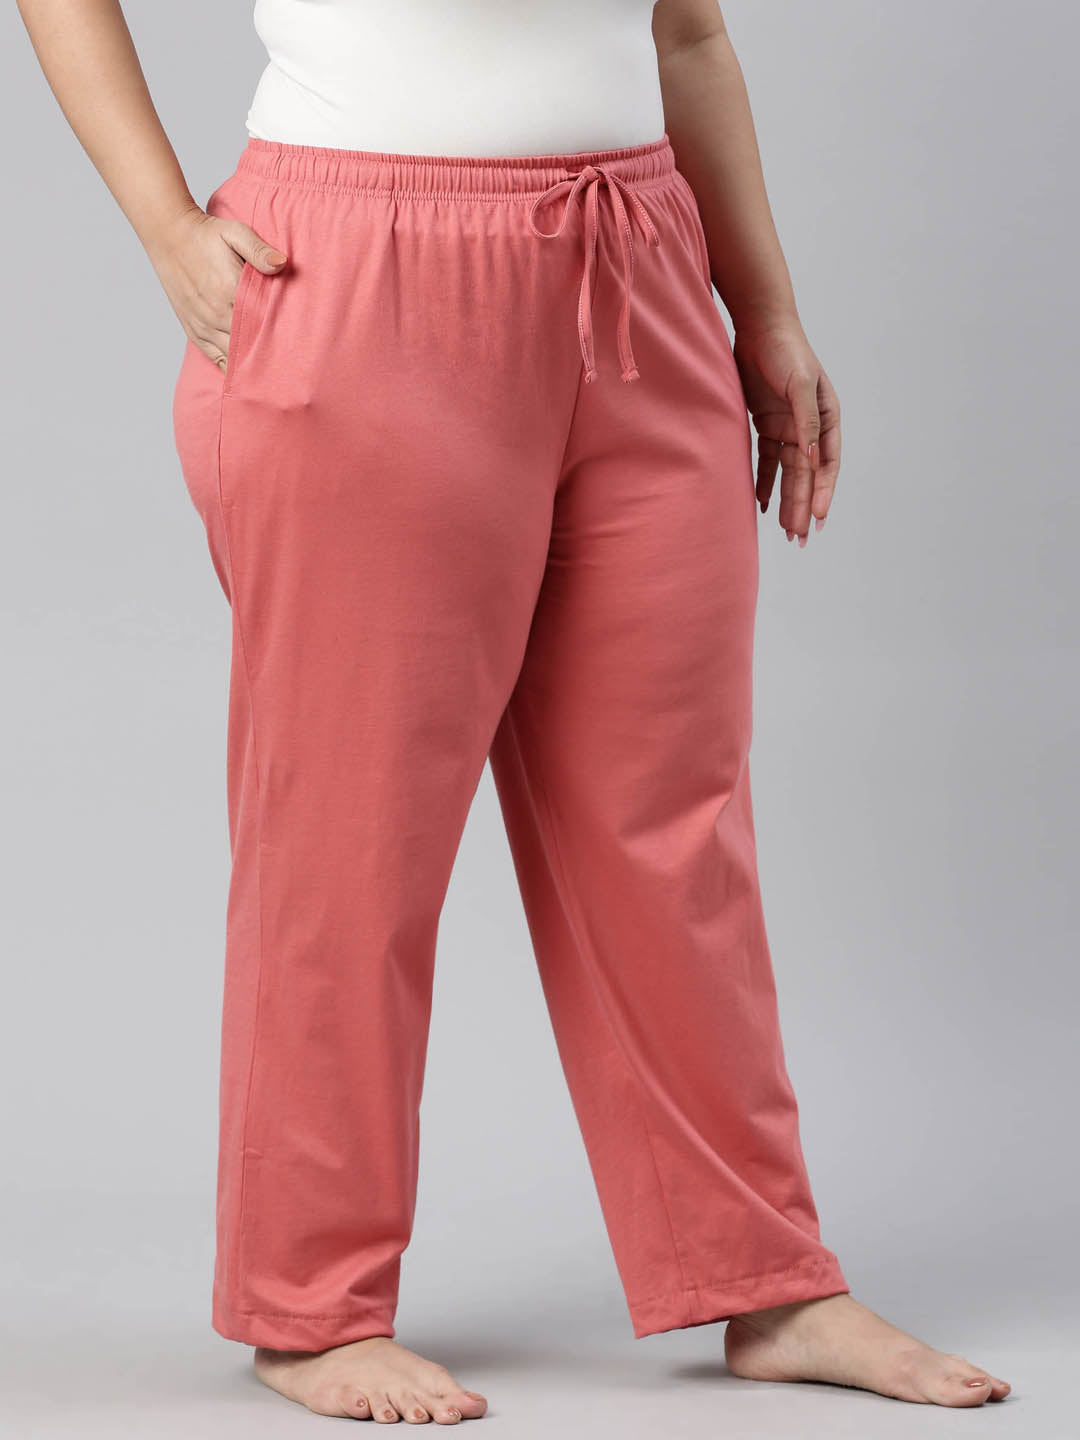 Rose Bud Pink Luxurious Linen Lounge Pant  Pink lounge pants, Comfy lounge  pants, Lounge pants